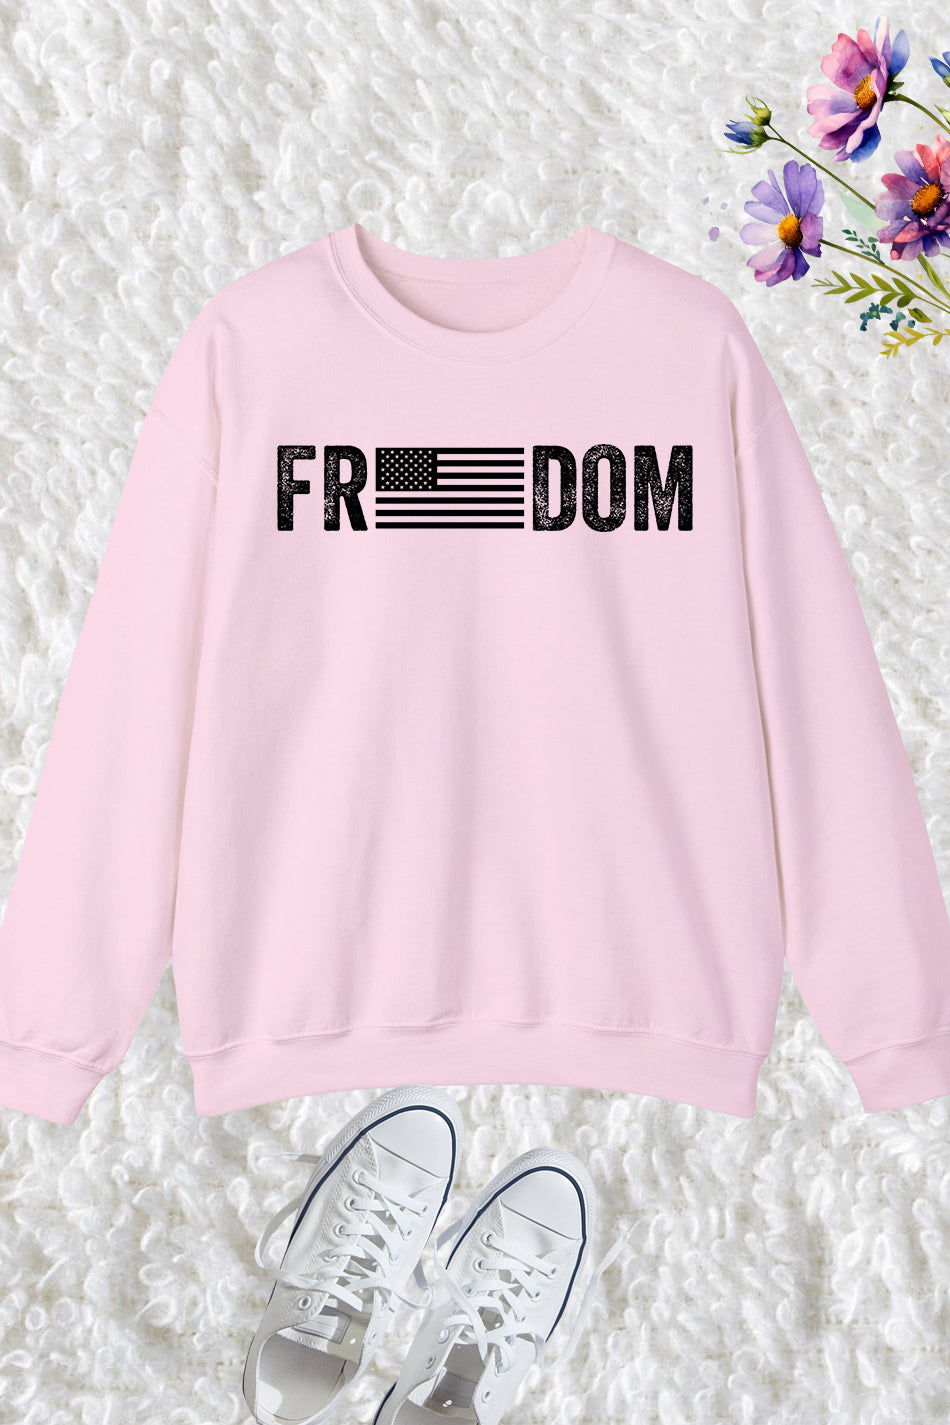 Freedom USA Flag Sweatshirt